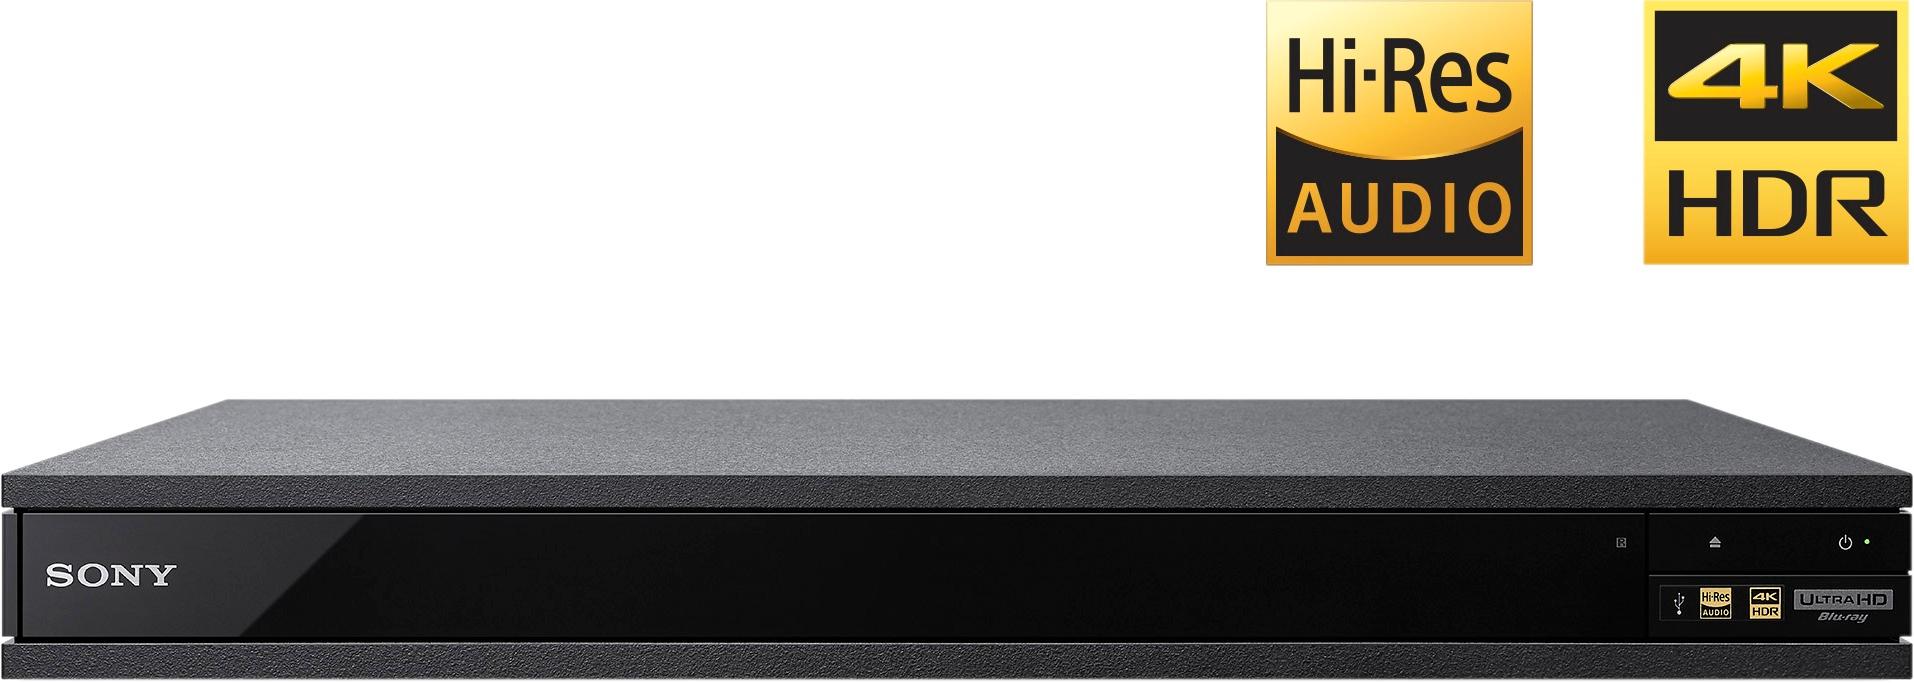 Momento Sumamente elegante pulgada Sony Streaming 4K Ultra HD 3D Hi-Res Audio Wi-Fi Built-In Blu-ray Player  Black UBPX800 - Best Buy